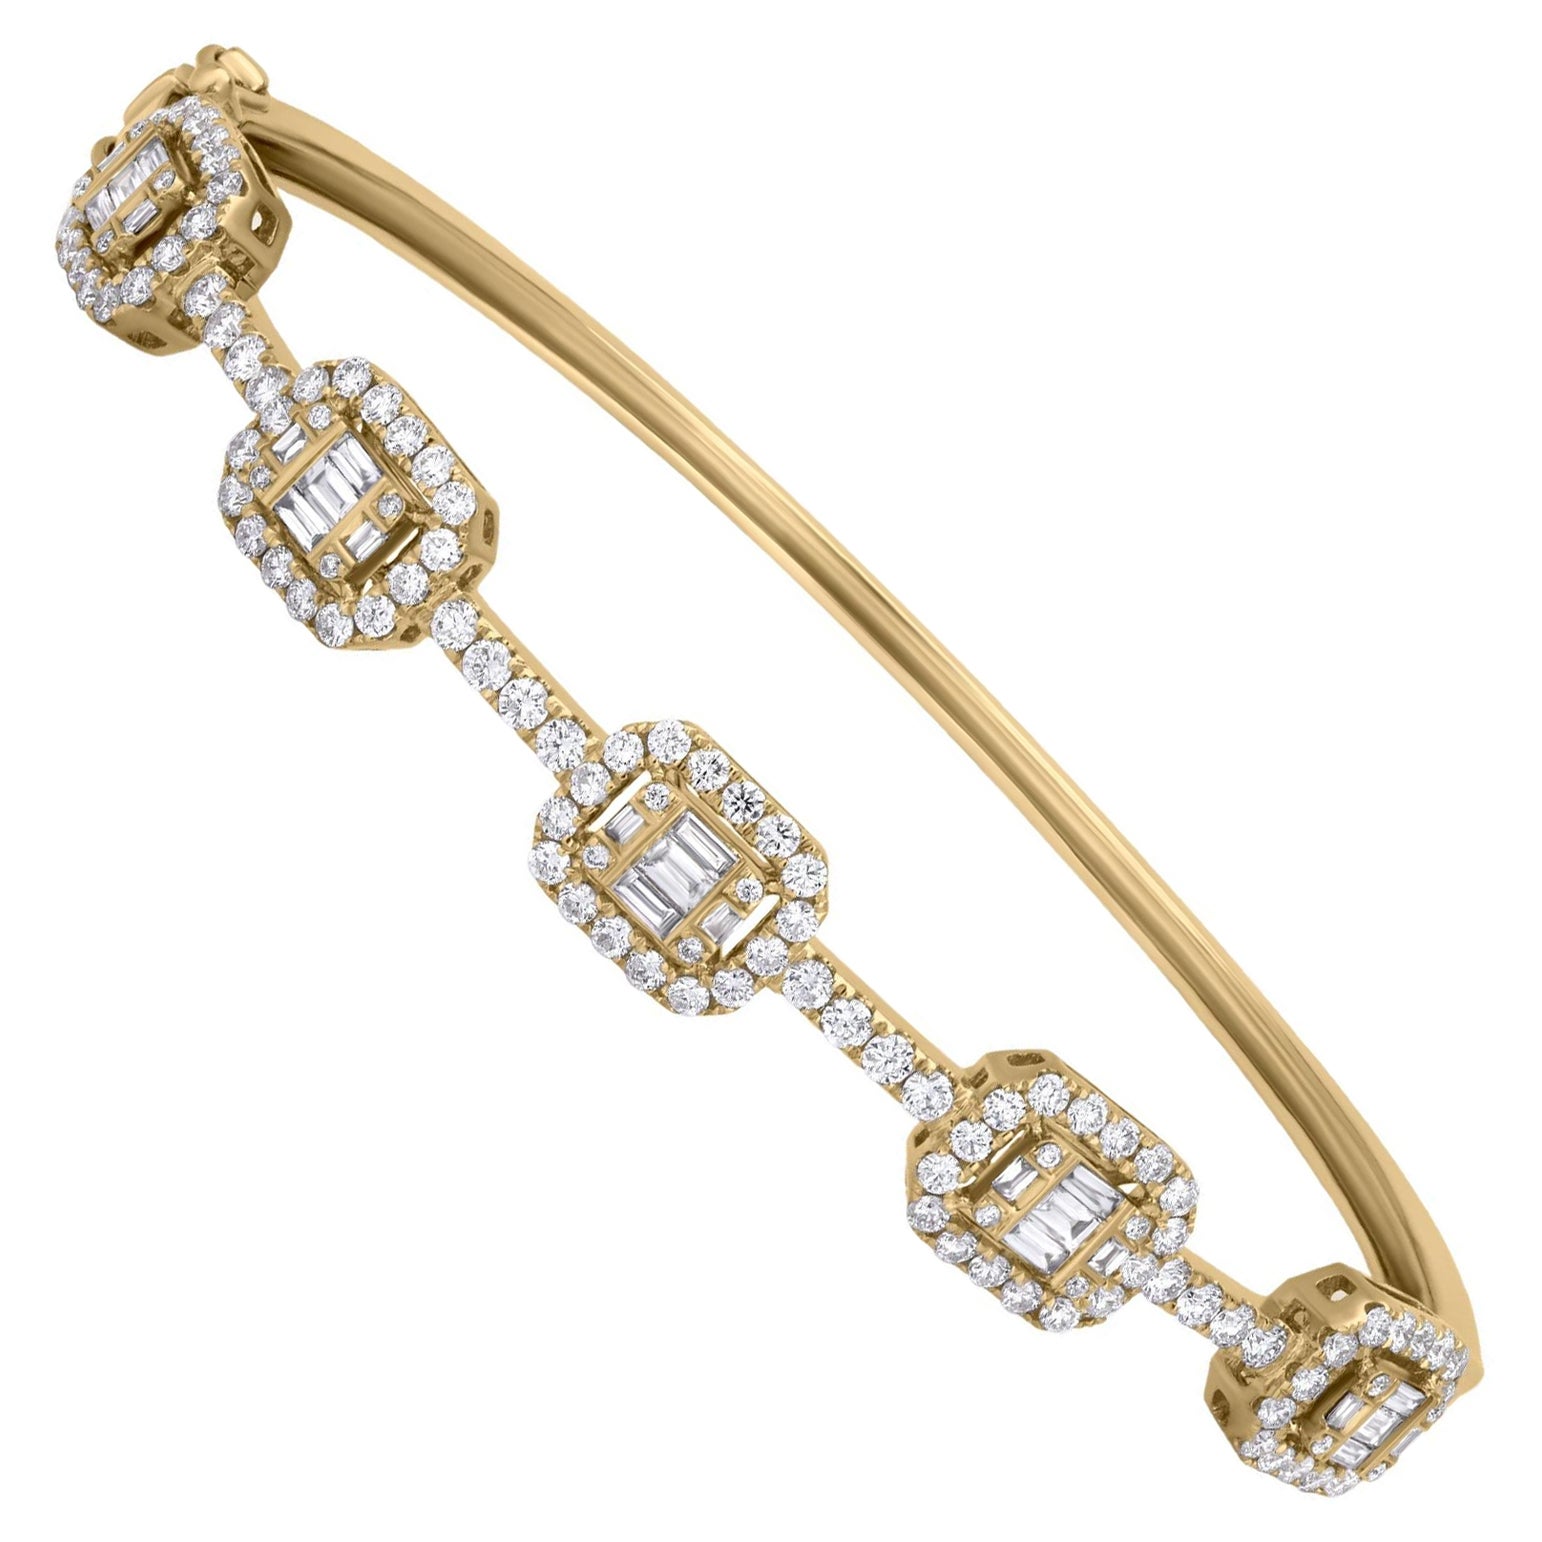 Luxle 1.48 Carat T.W. Diamond Frames Bangle Bracelet in 18k Yellow Gold For Sale